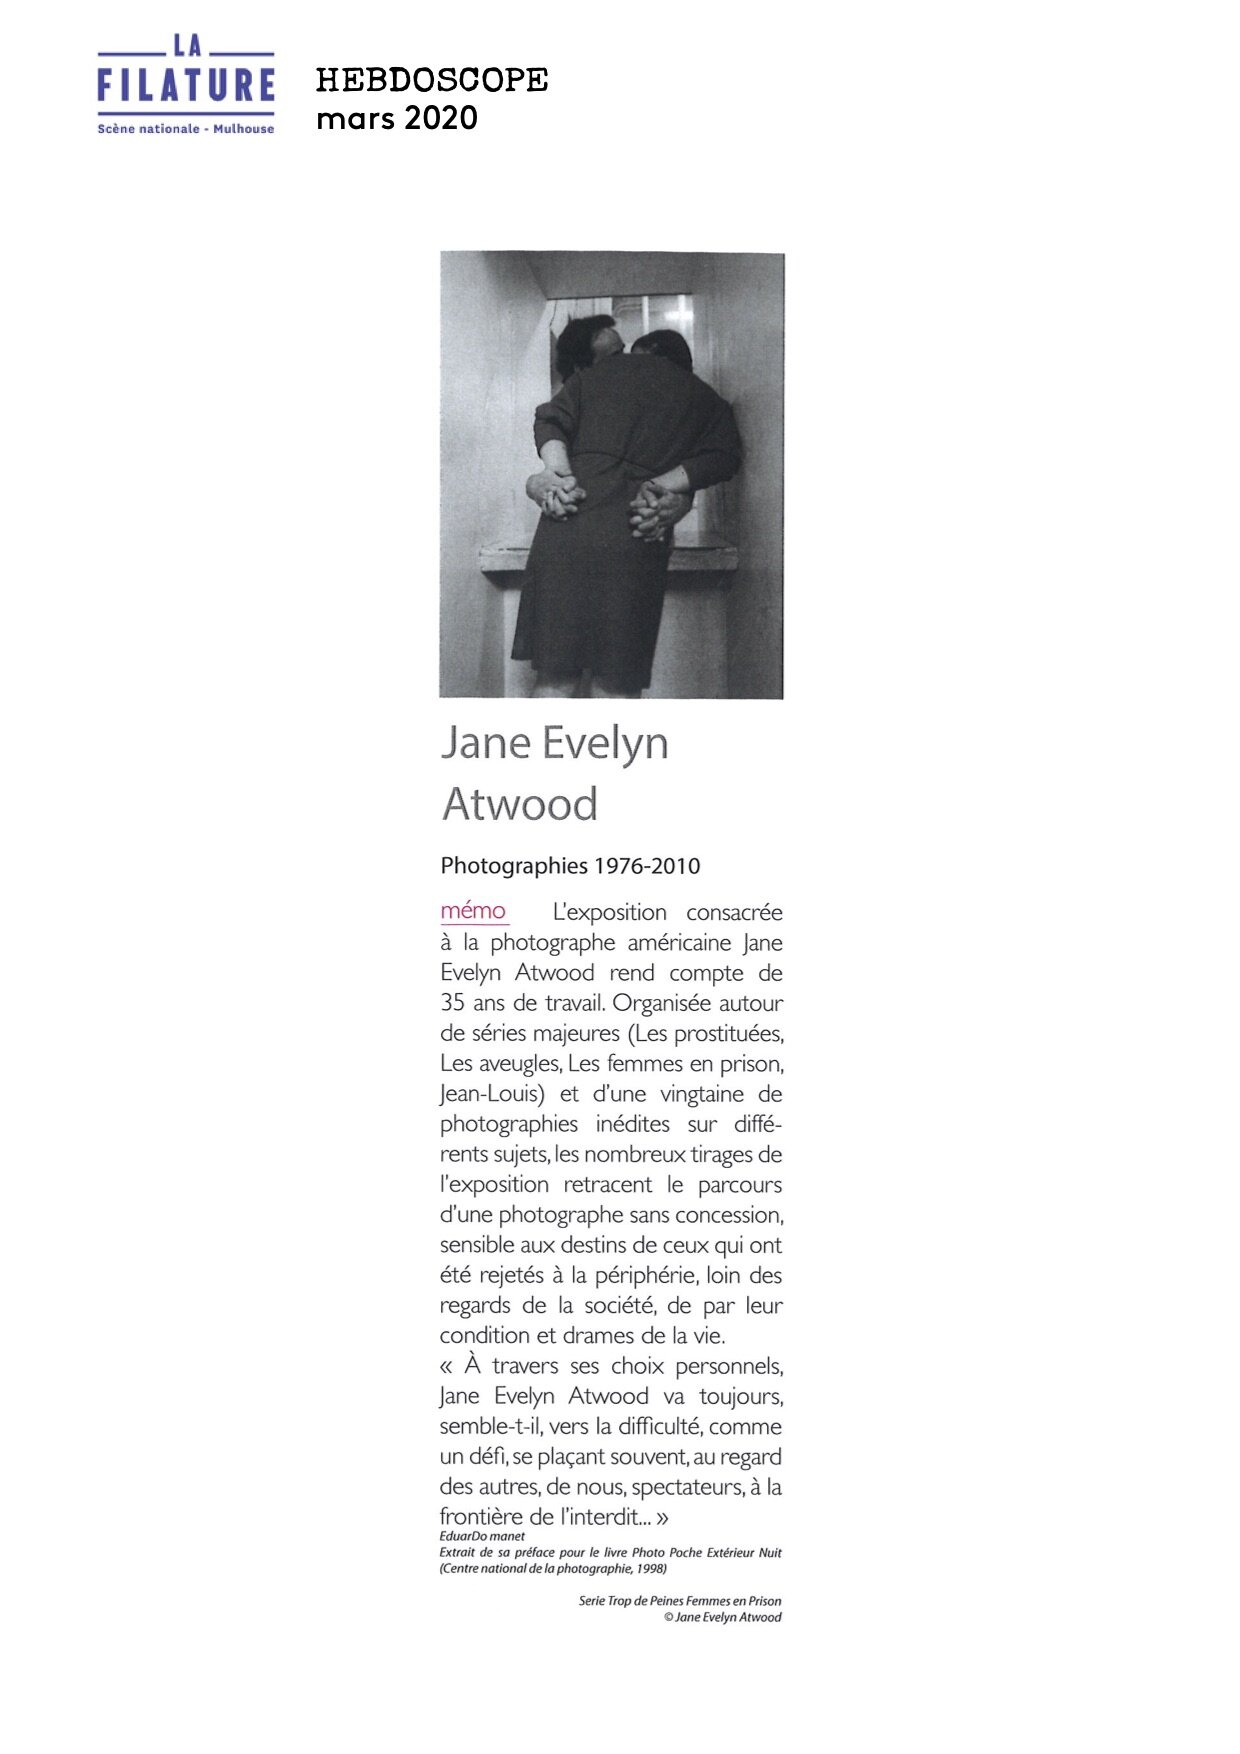 exposition de Jane Evelyn Atwood - Presse La Filature 17.jpg